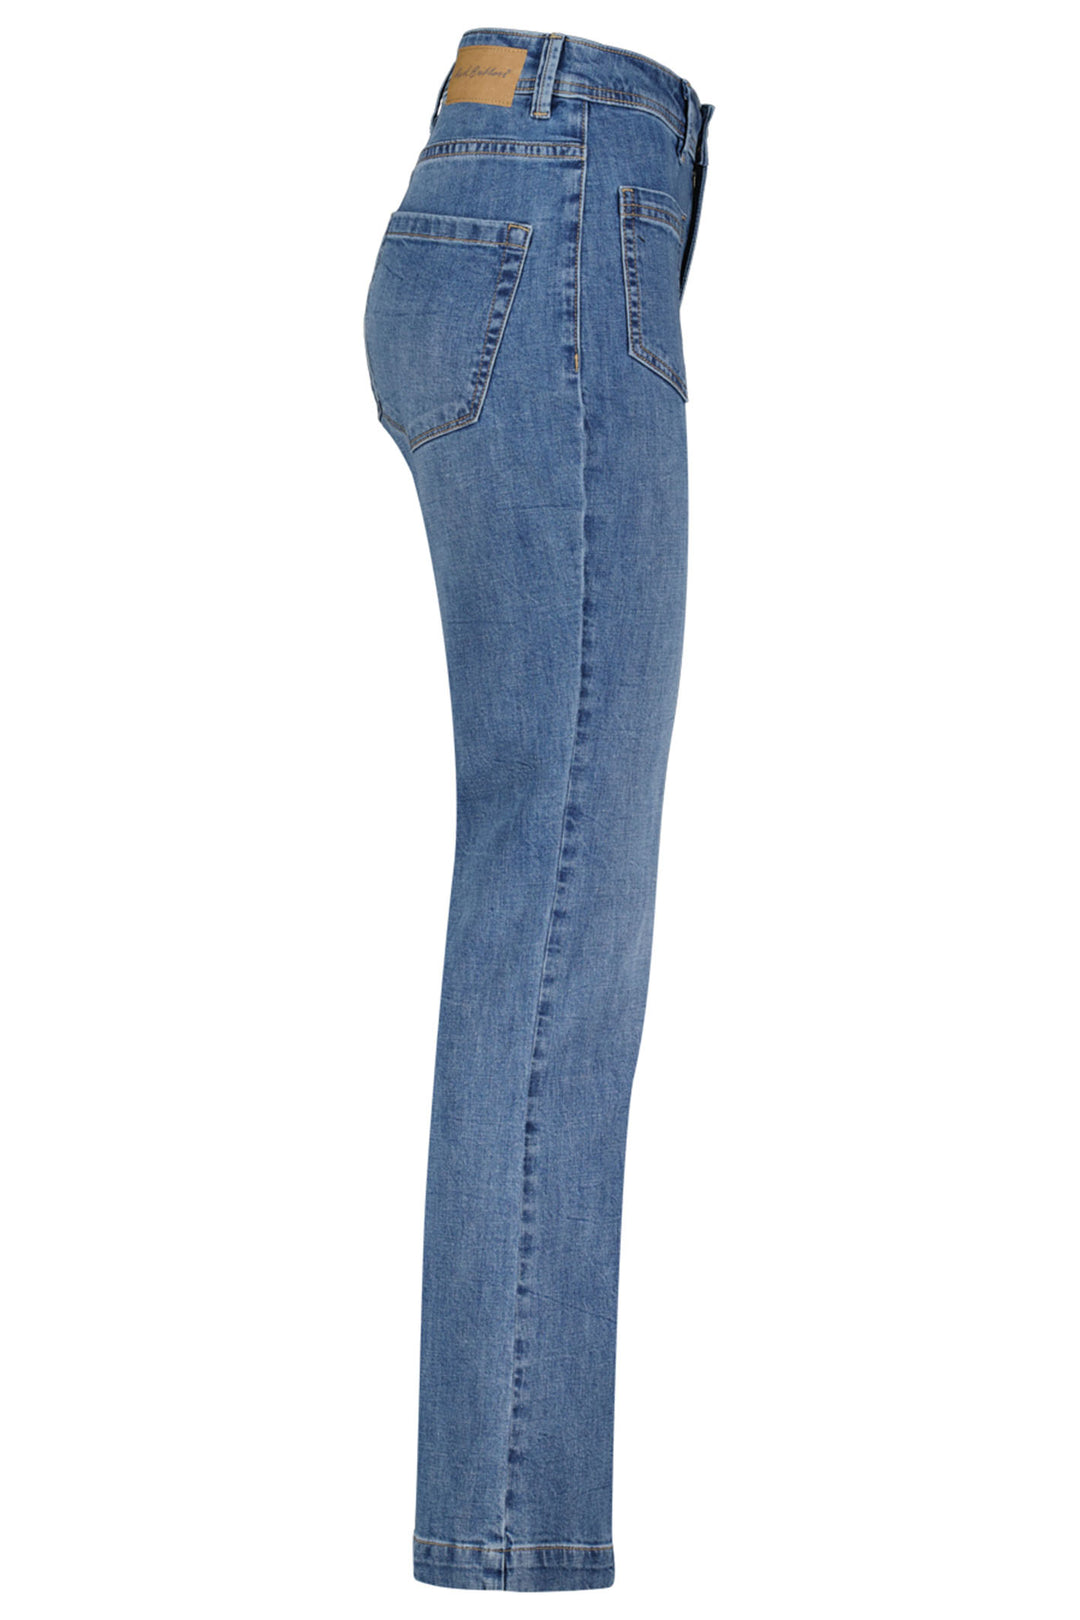 Red Button SRB4151 Midstone Blue Babette Front Patch Pocket High Rise Jeans - Dotique